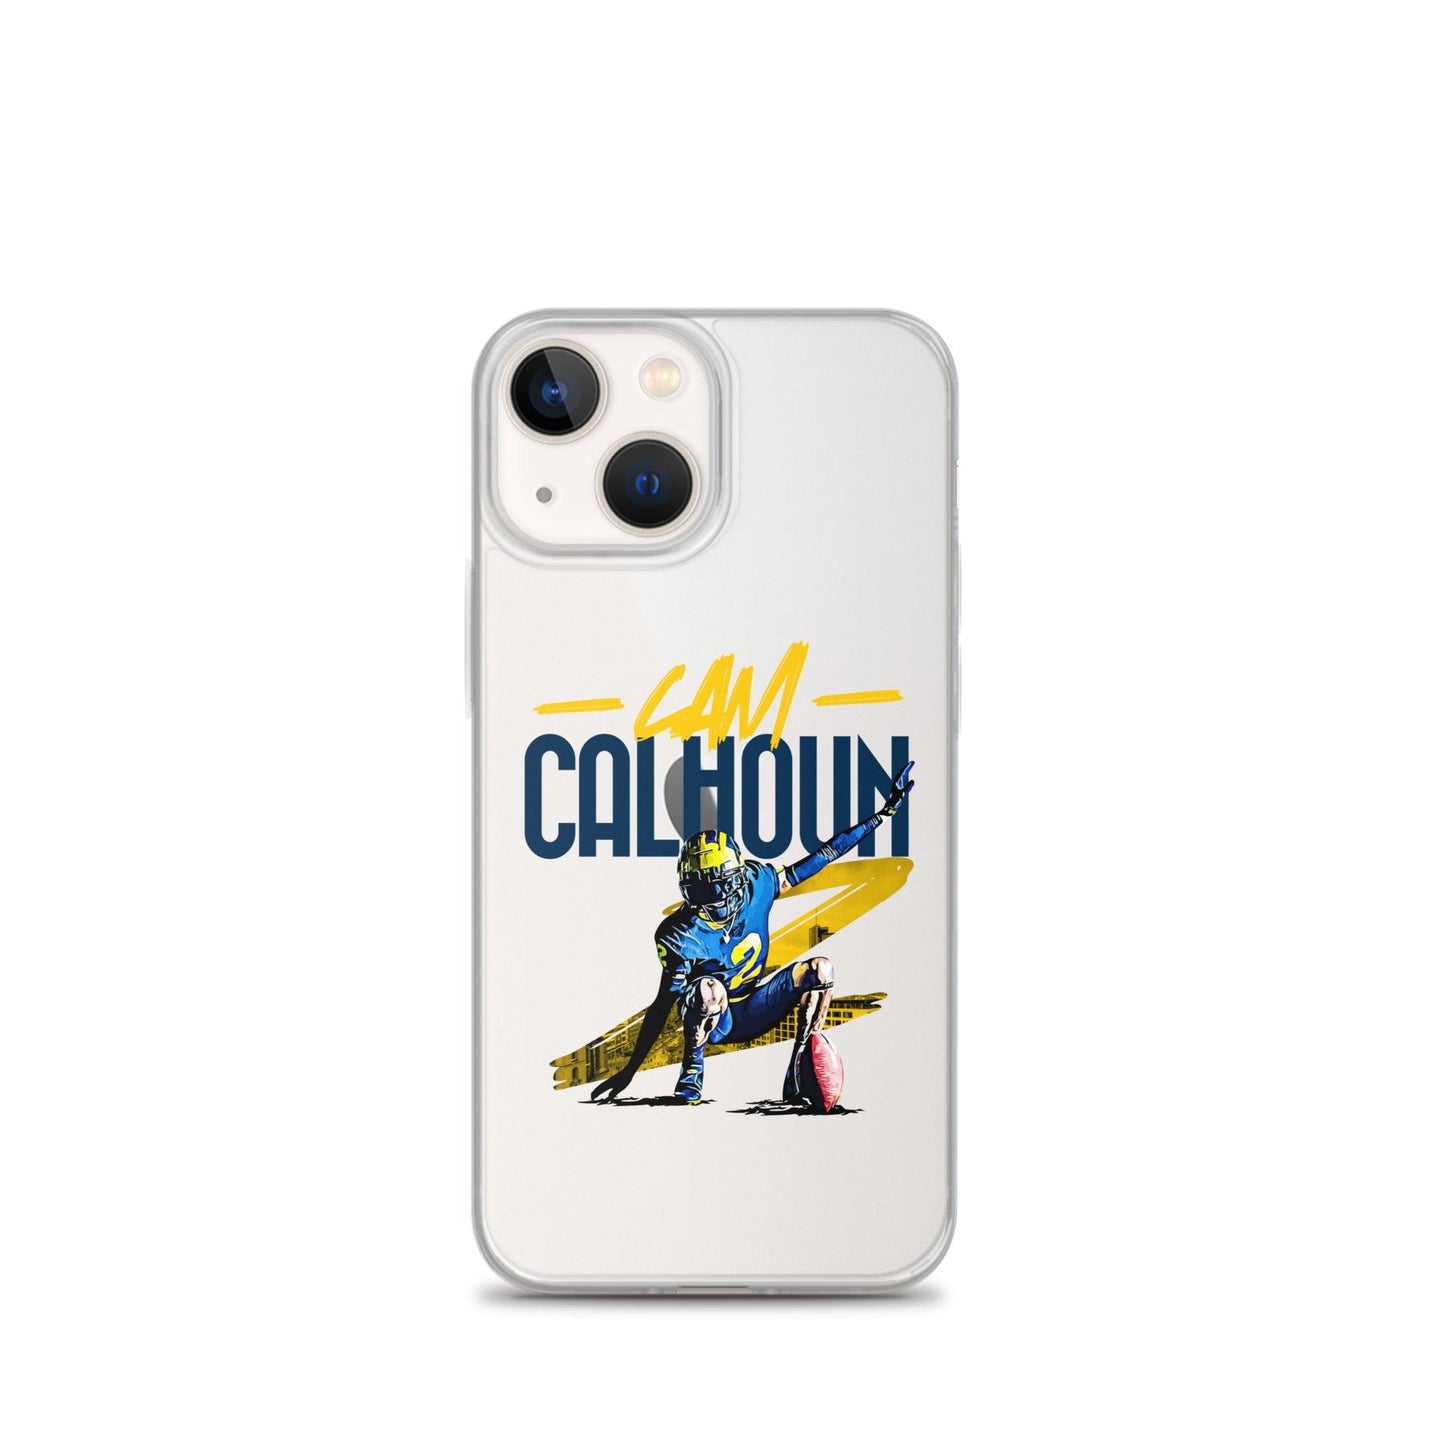 Cameron Calhoun "Gameday" iPhone® - Fan Arch